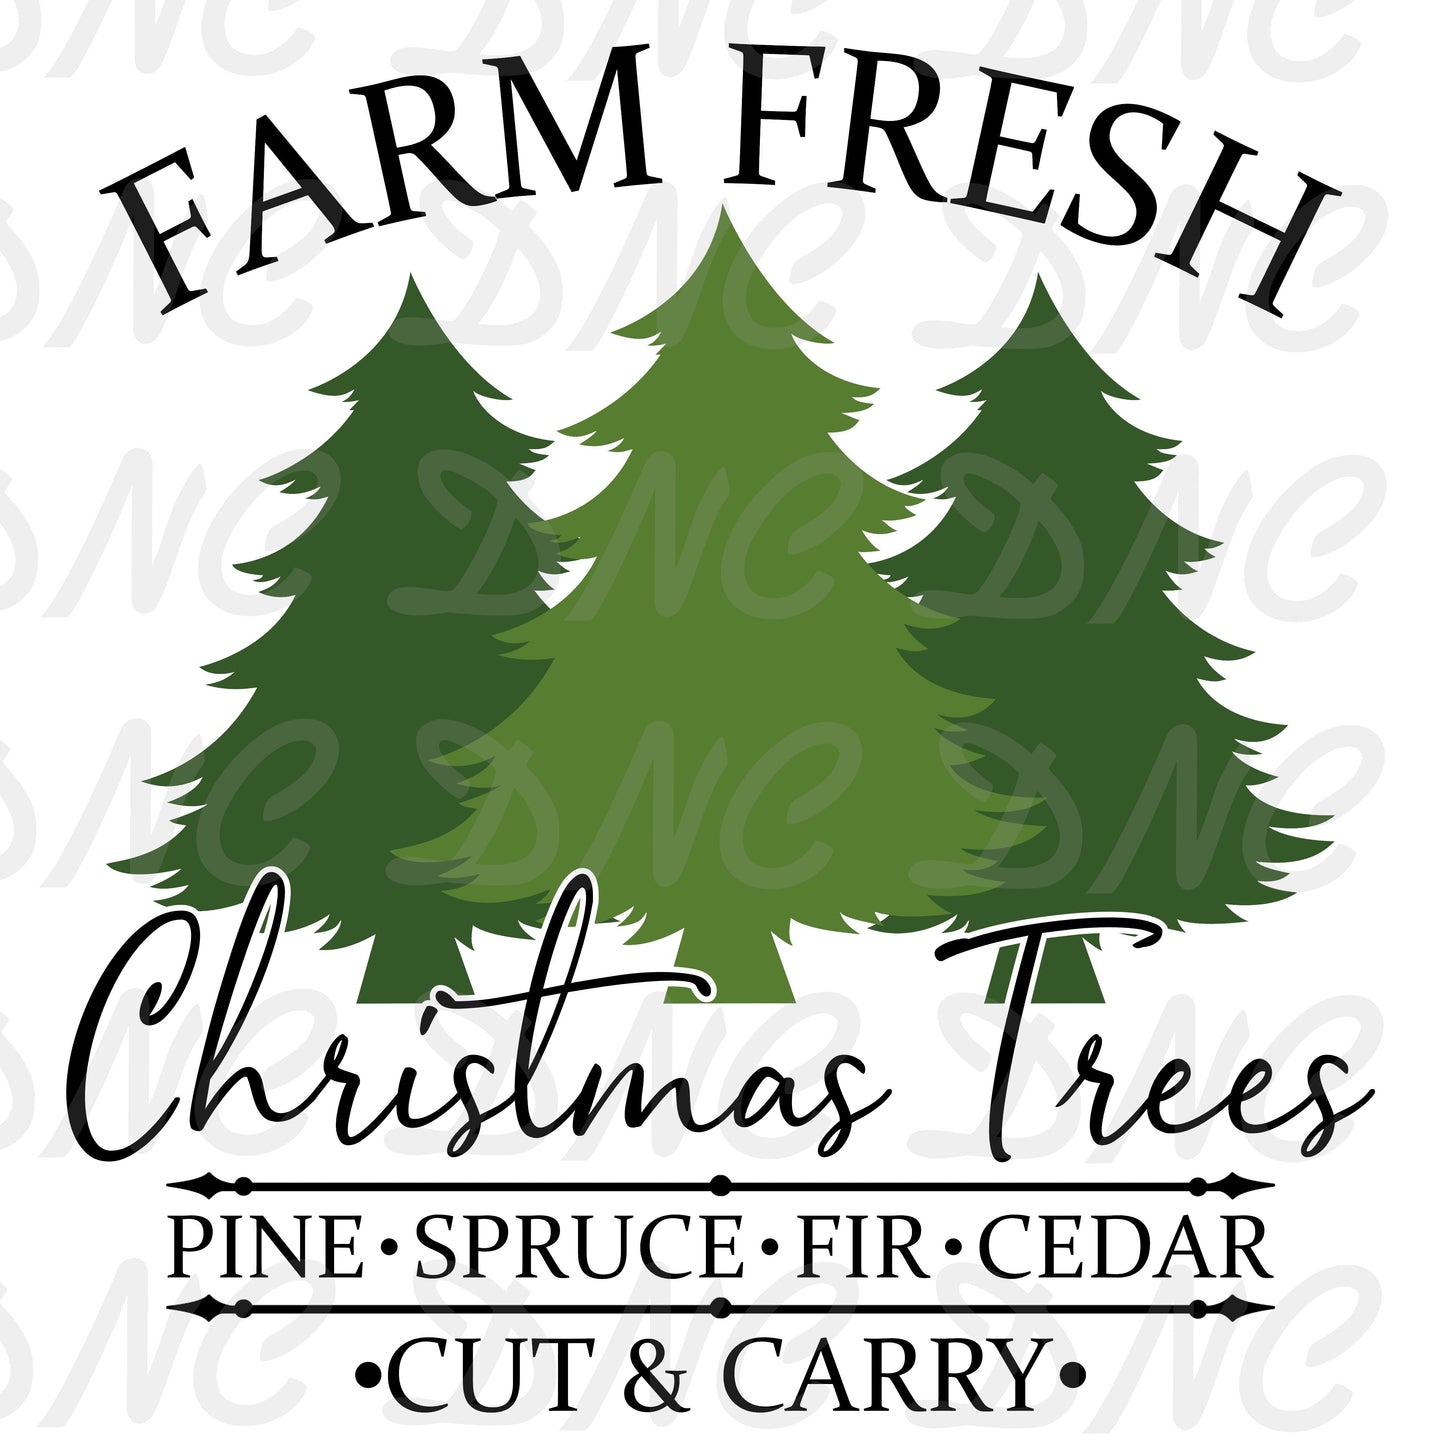 Farm fresh christmas trees - Sublimation